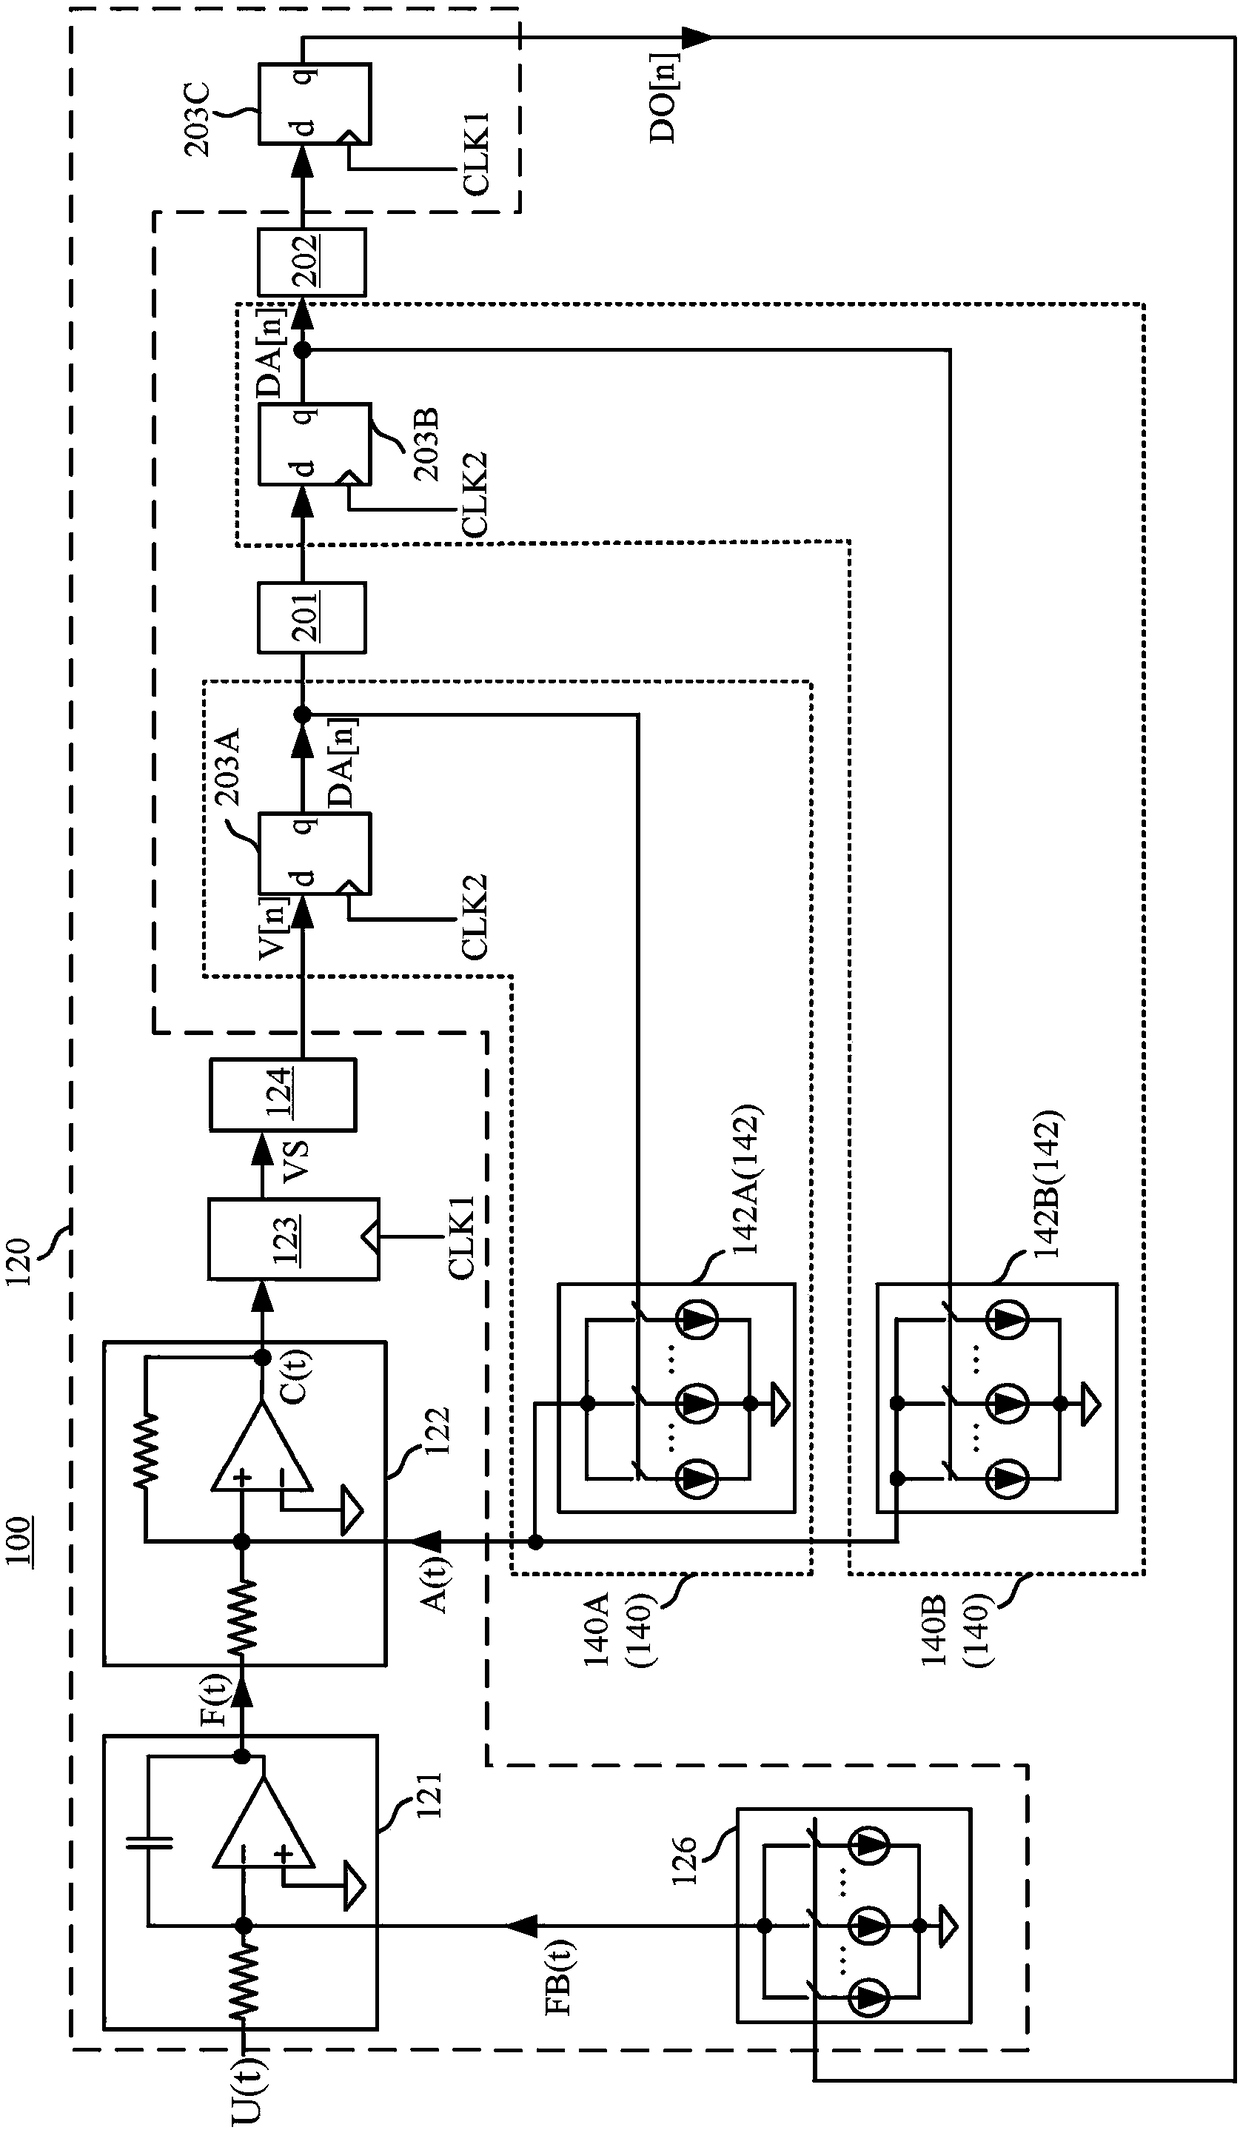 Delta-Sigma modulator and signal conversion method